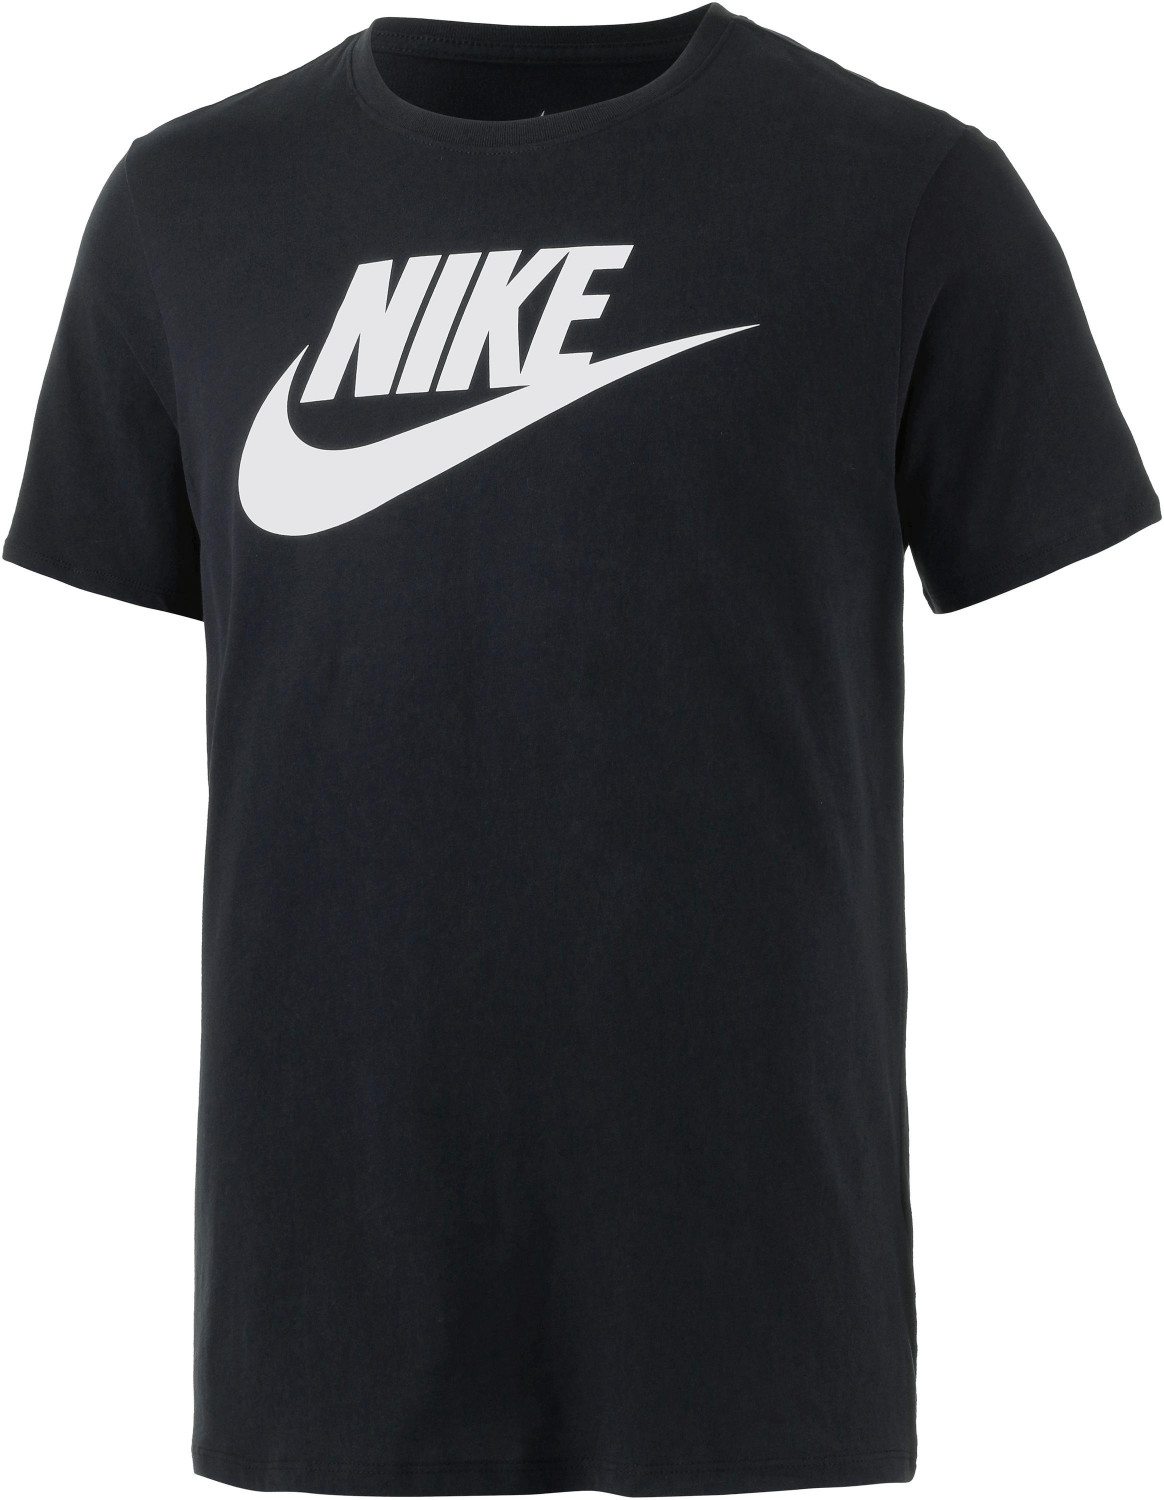 Nike T Shirt Mit Logo Ab 19 95 Preisvergleich Bei Idealo De